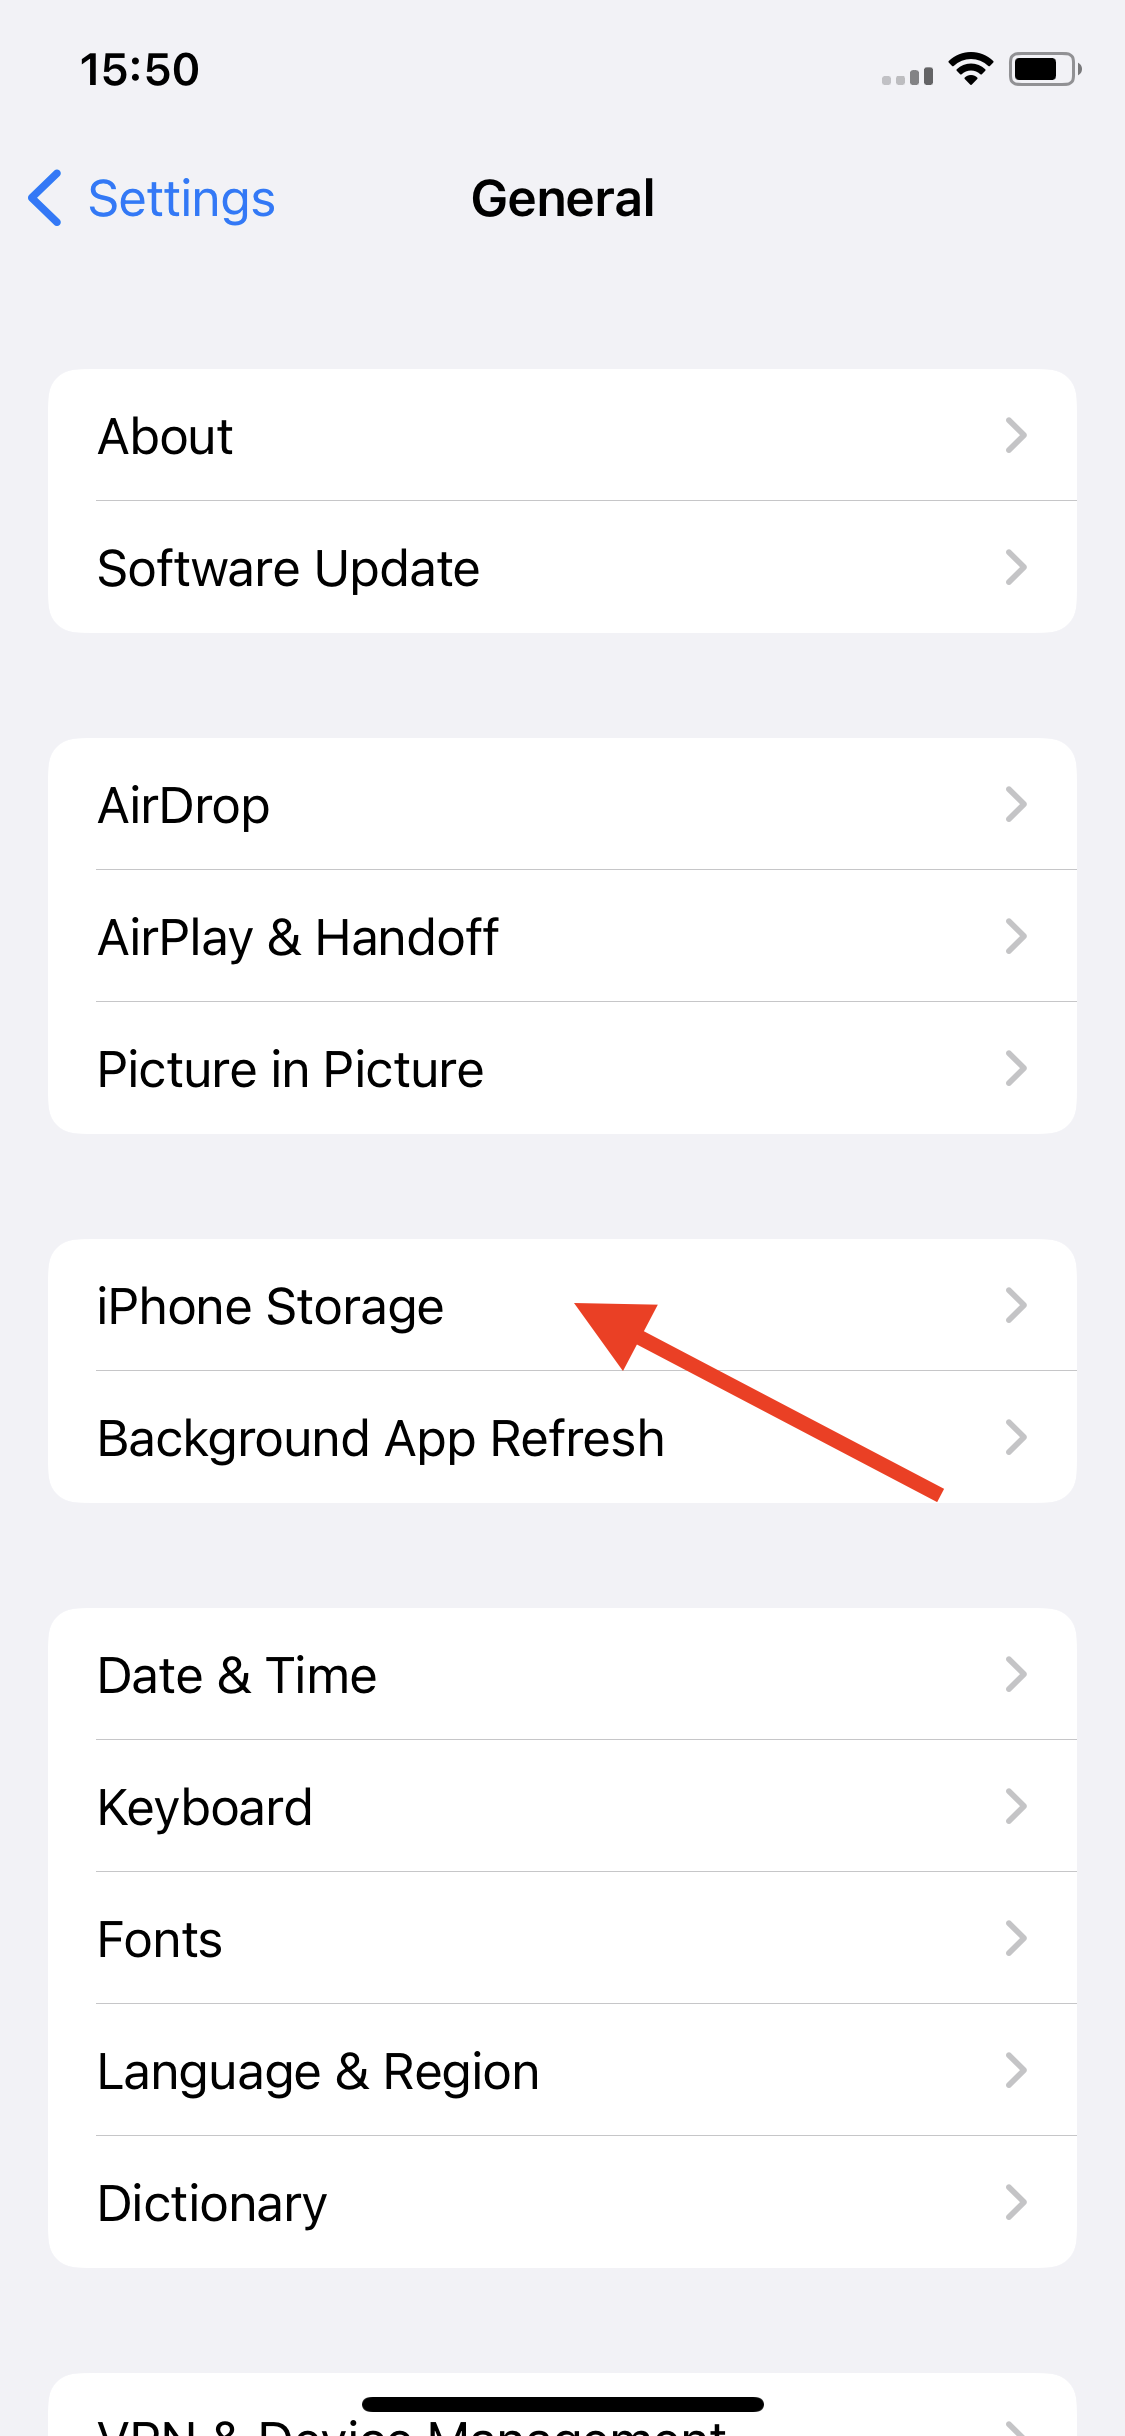 Open 'iPhone Storage'